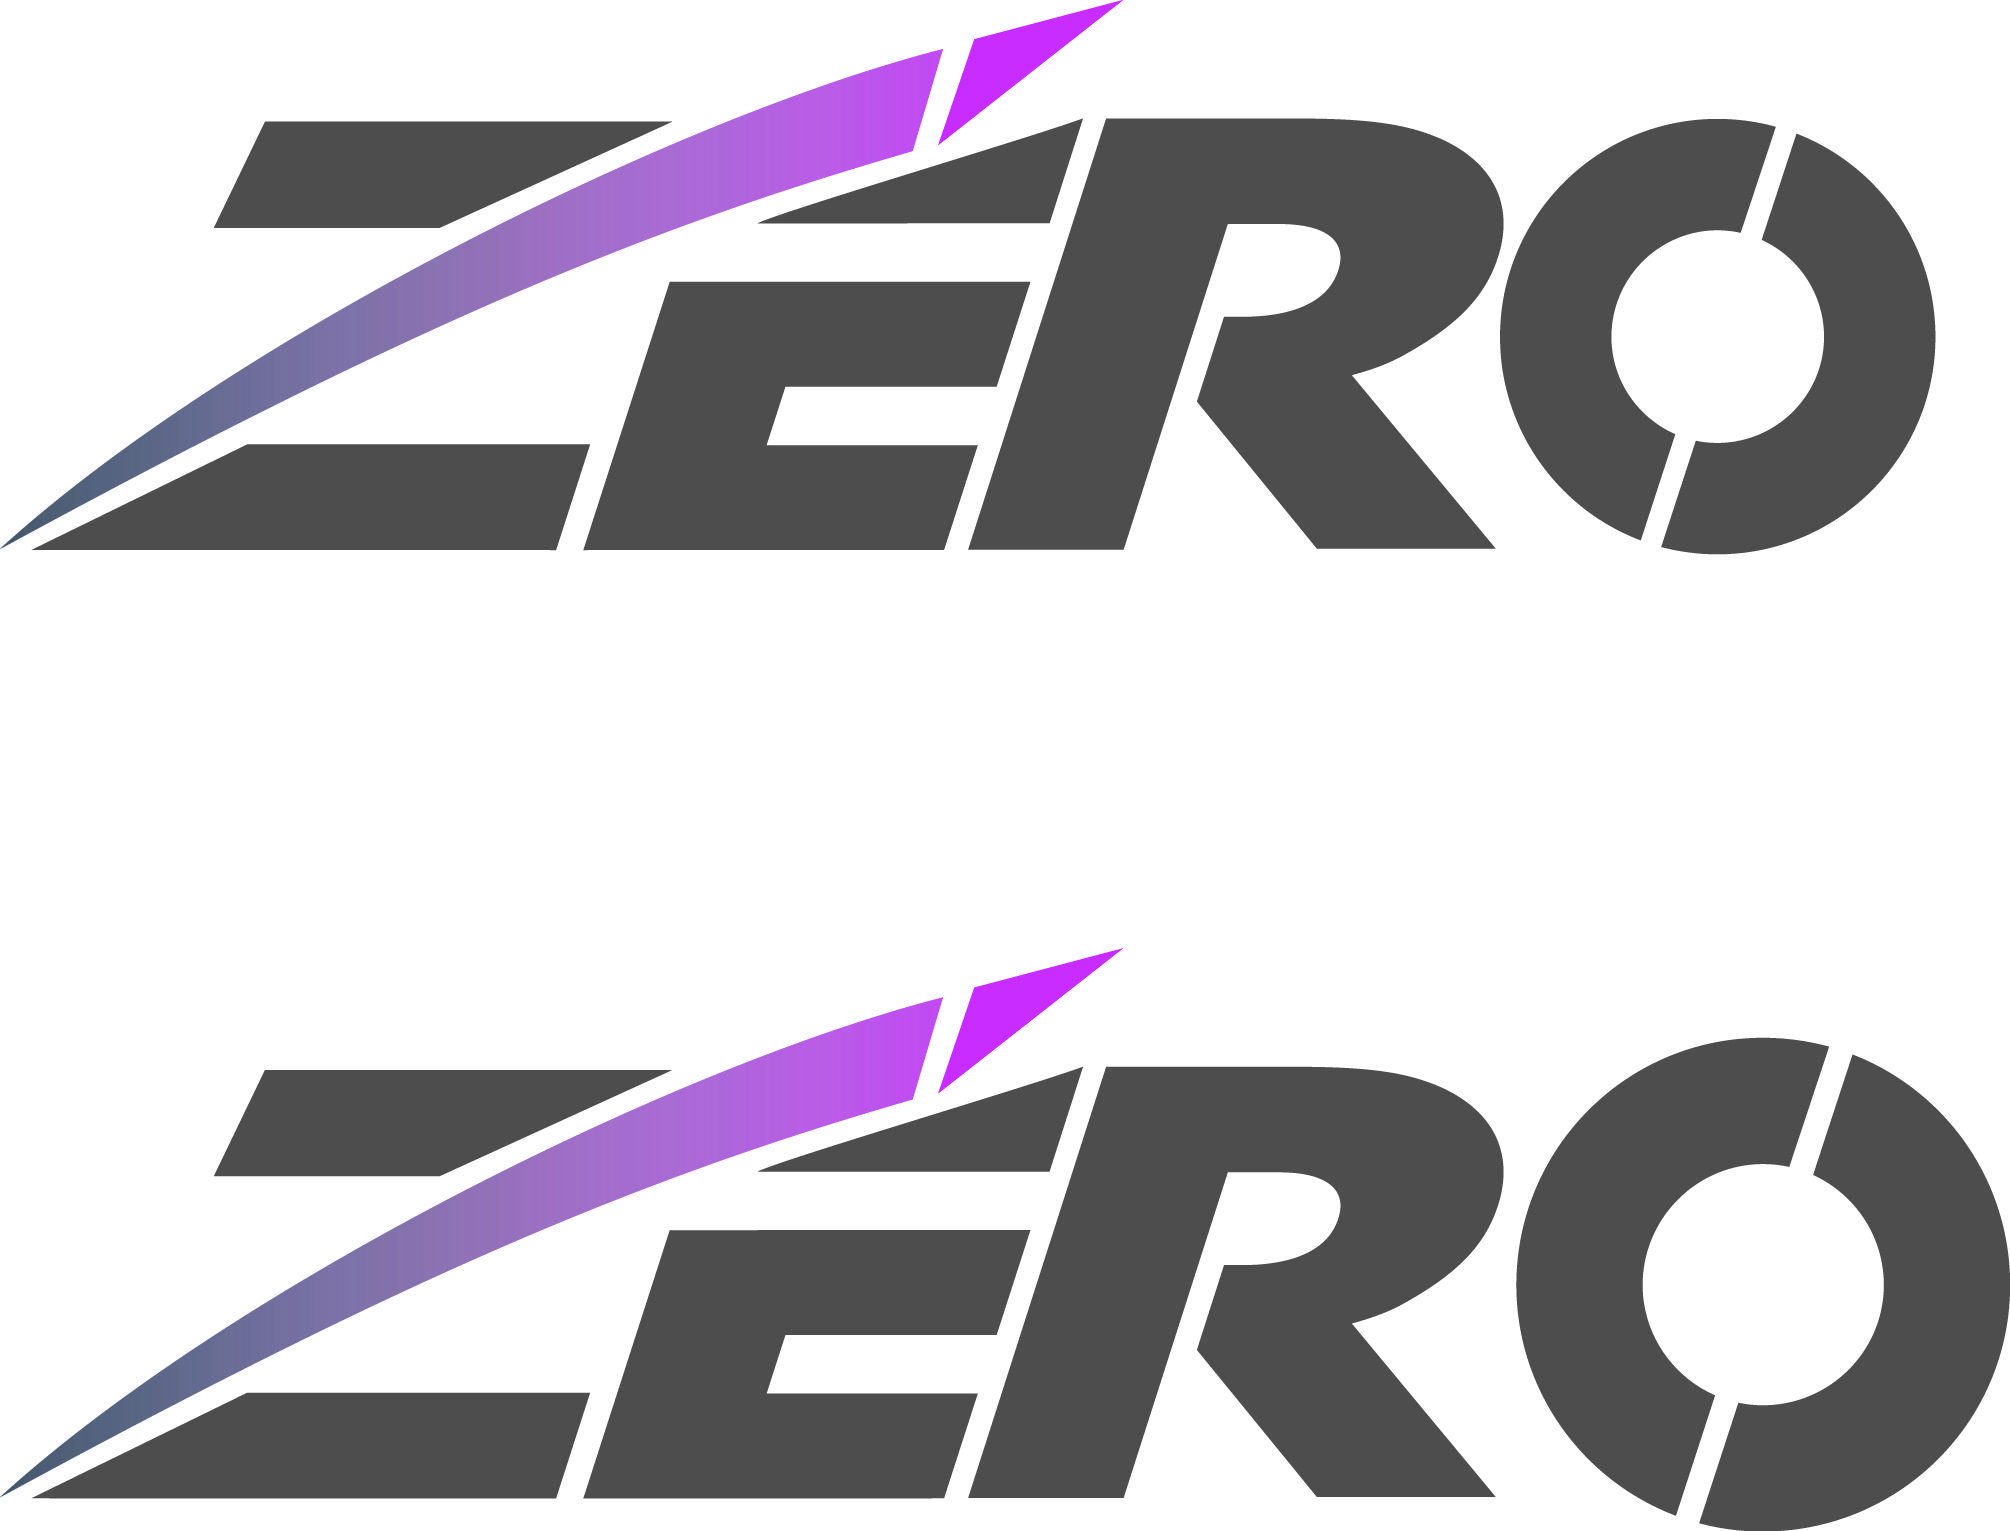 Zero Logo - Index Of Image Zero Logos